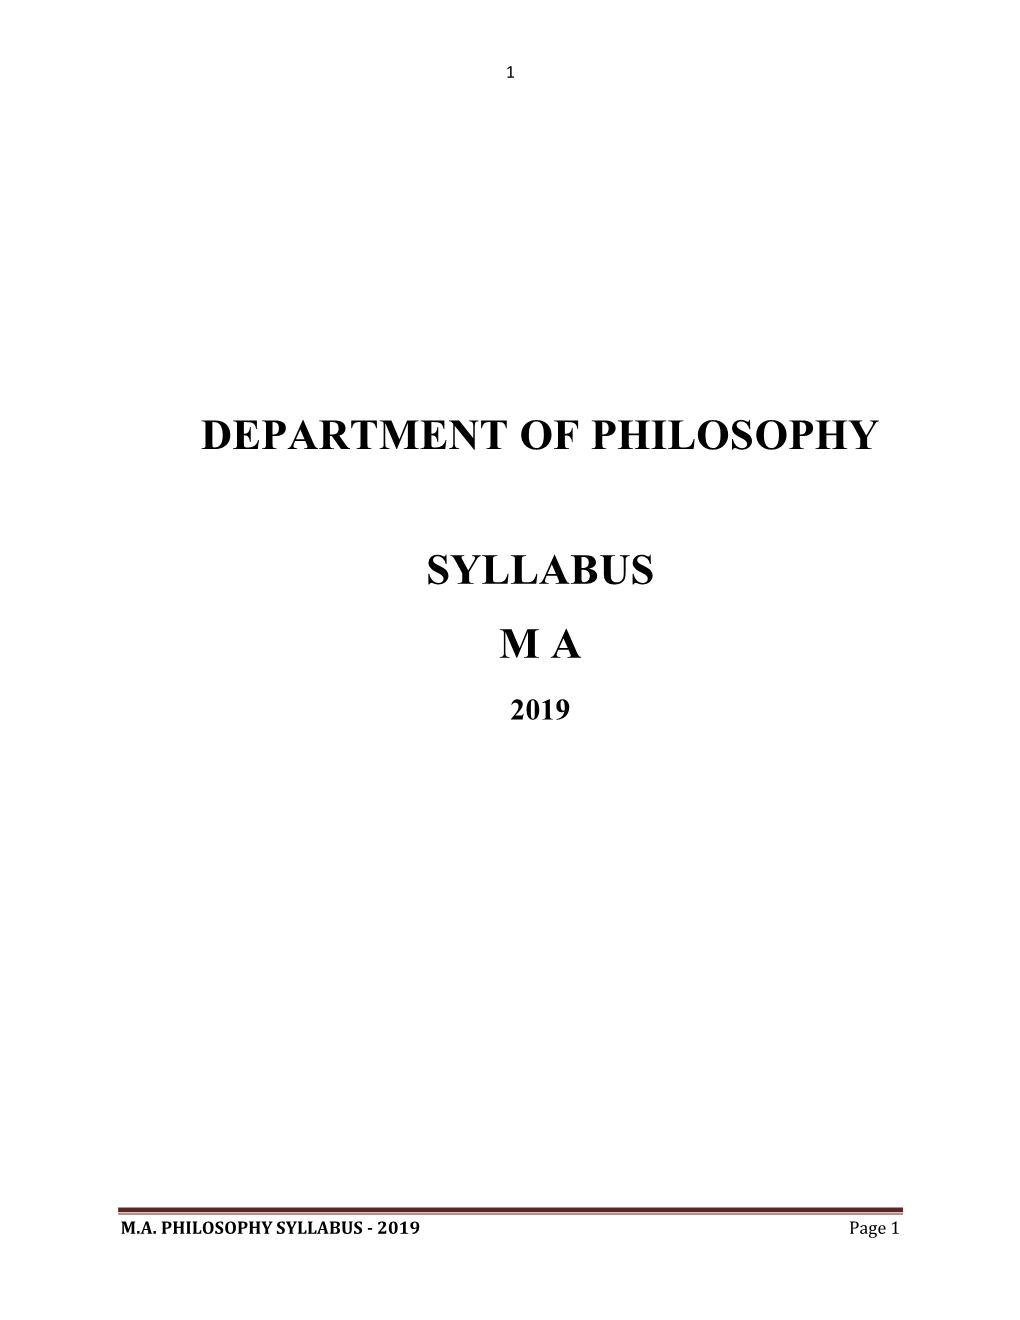 Department of Philosophy Syllabus